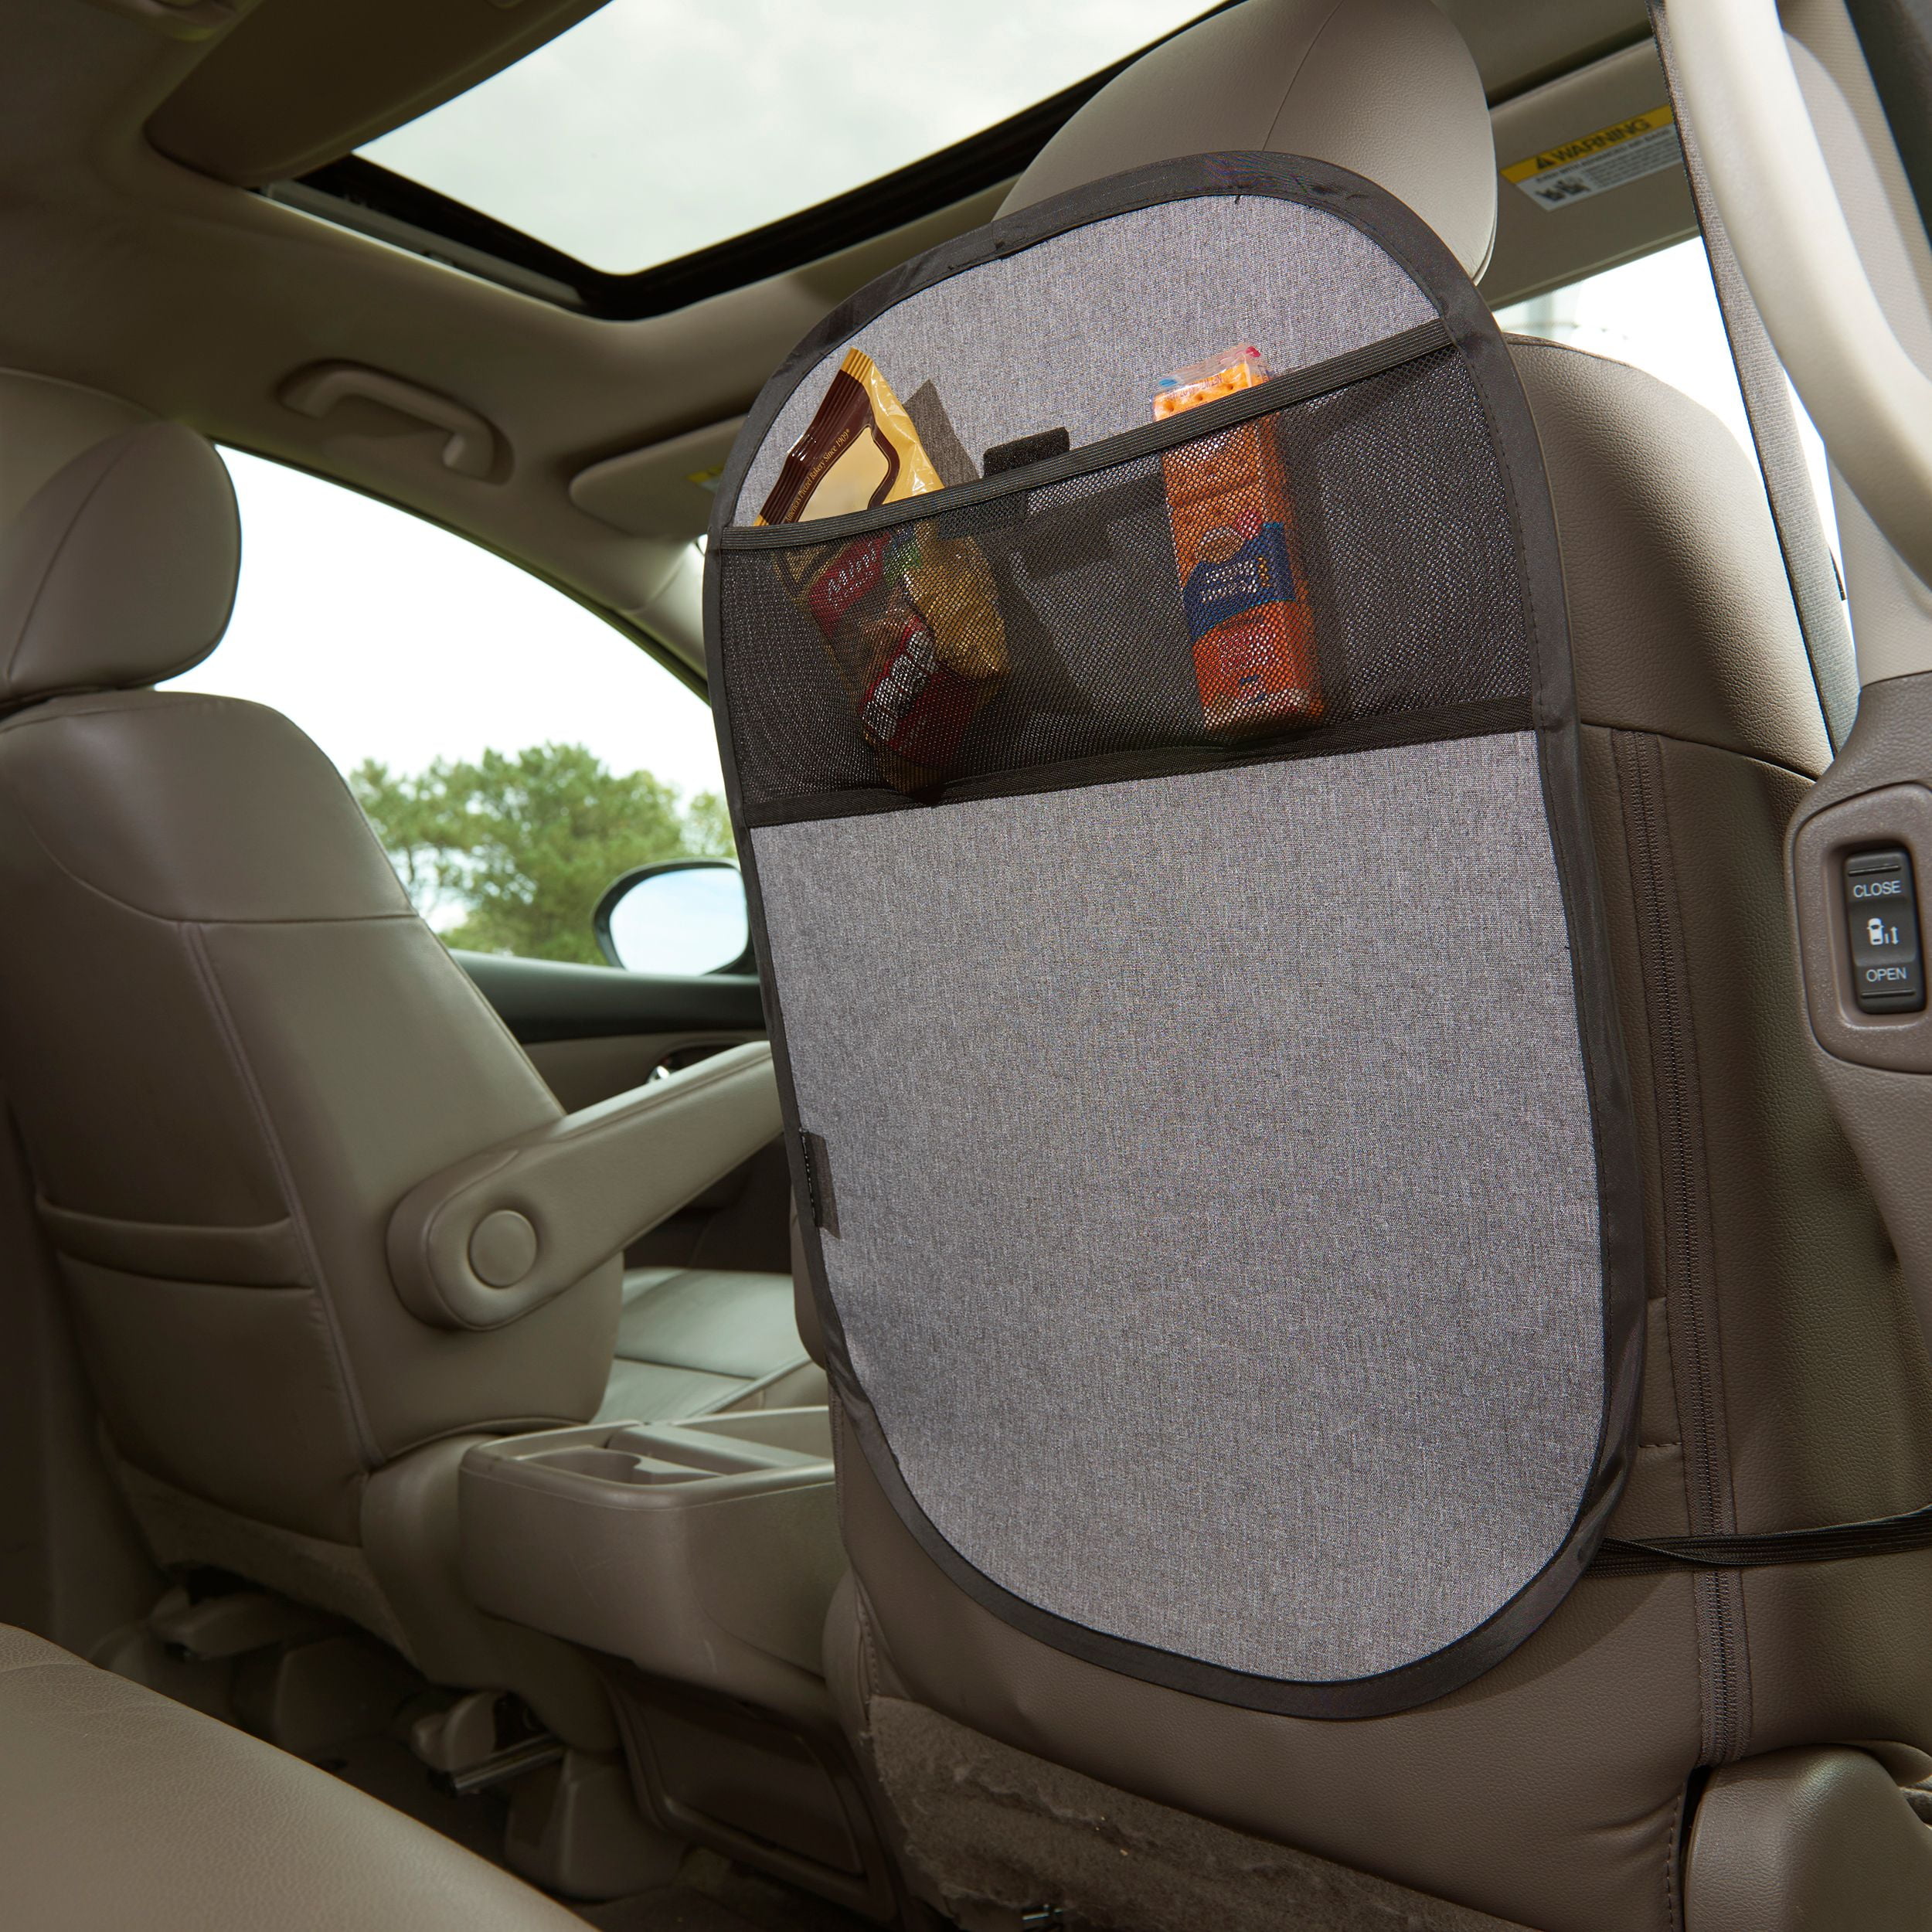 Set Protection Mat Under Child Car Seat Booster Protector Anti-Damage Kick Mat